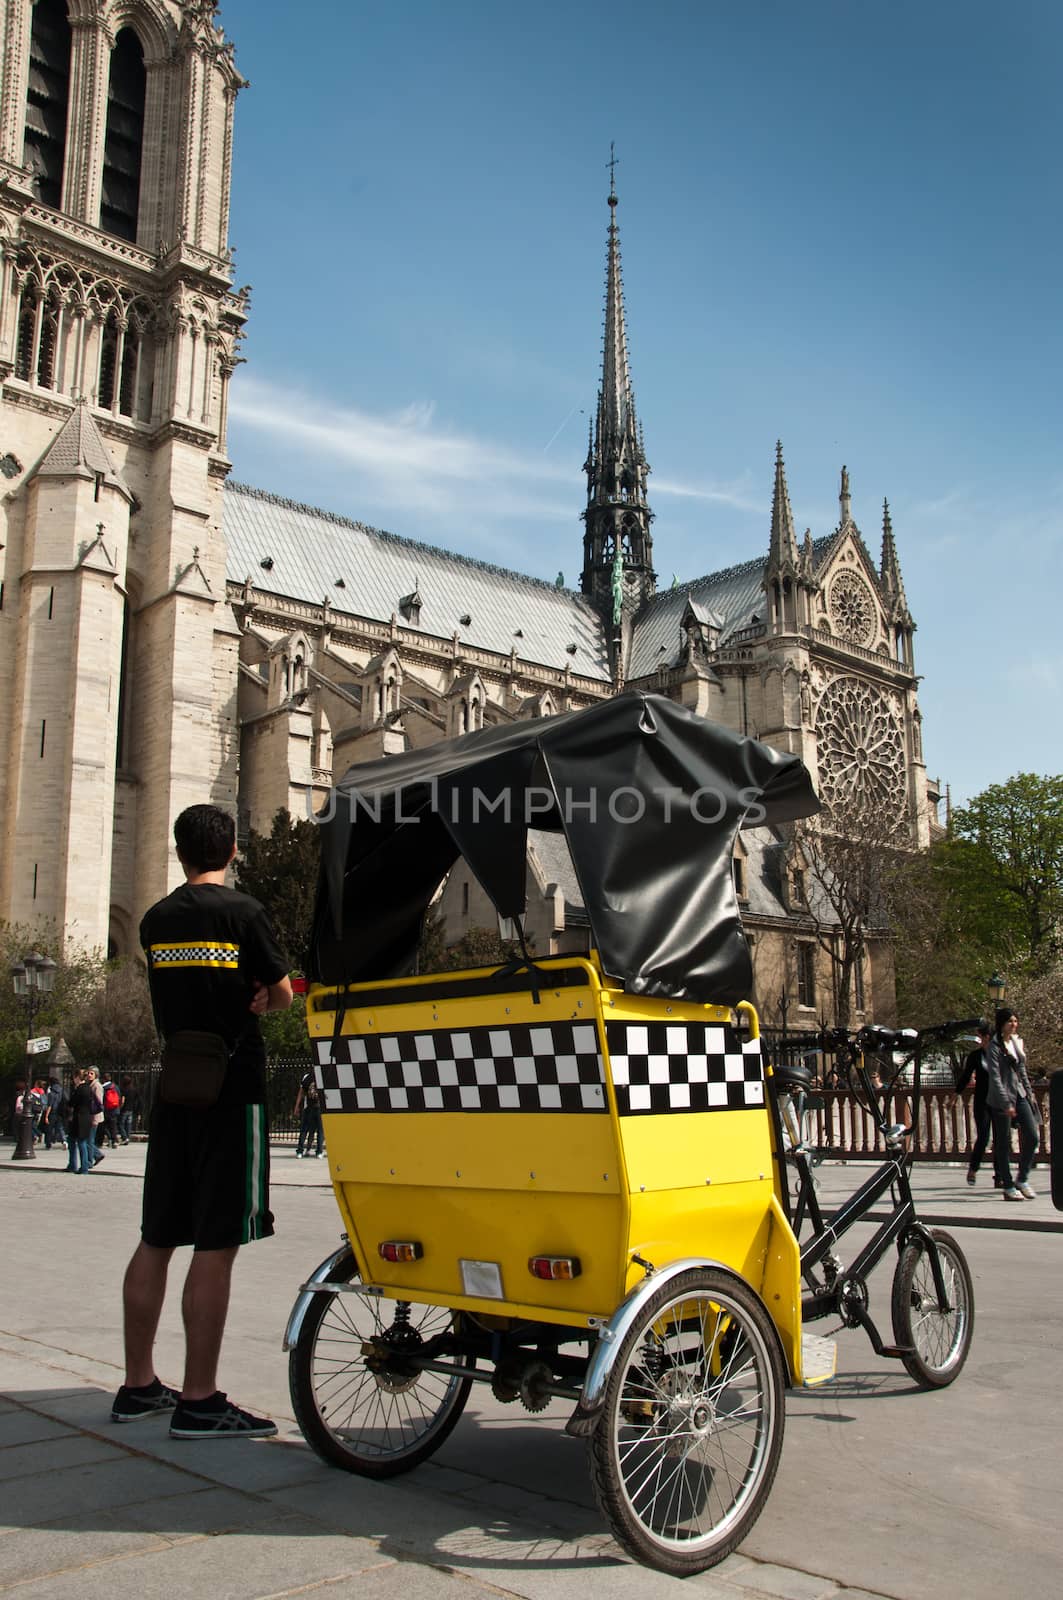 parisian velotaxi in france